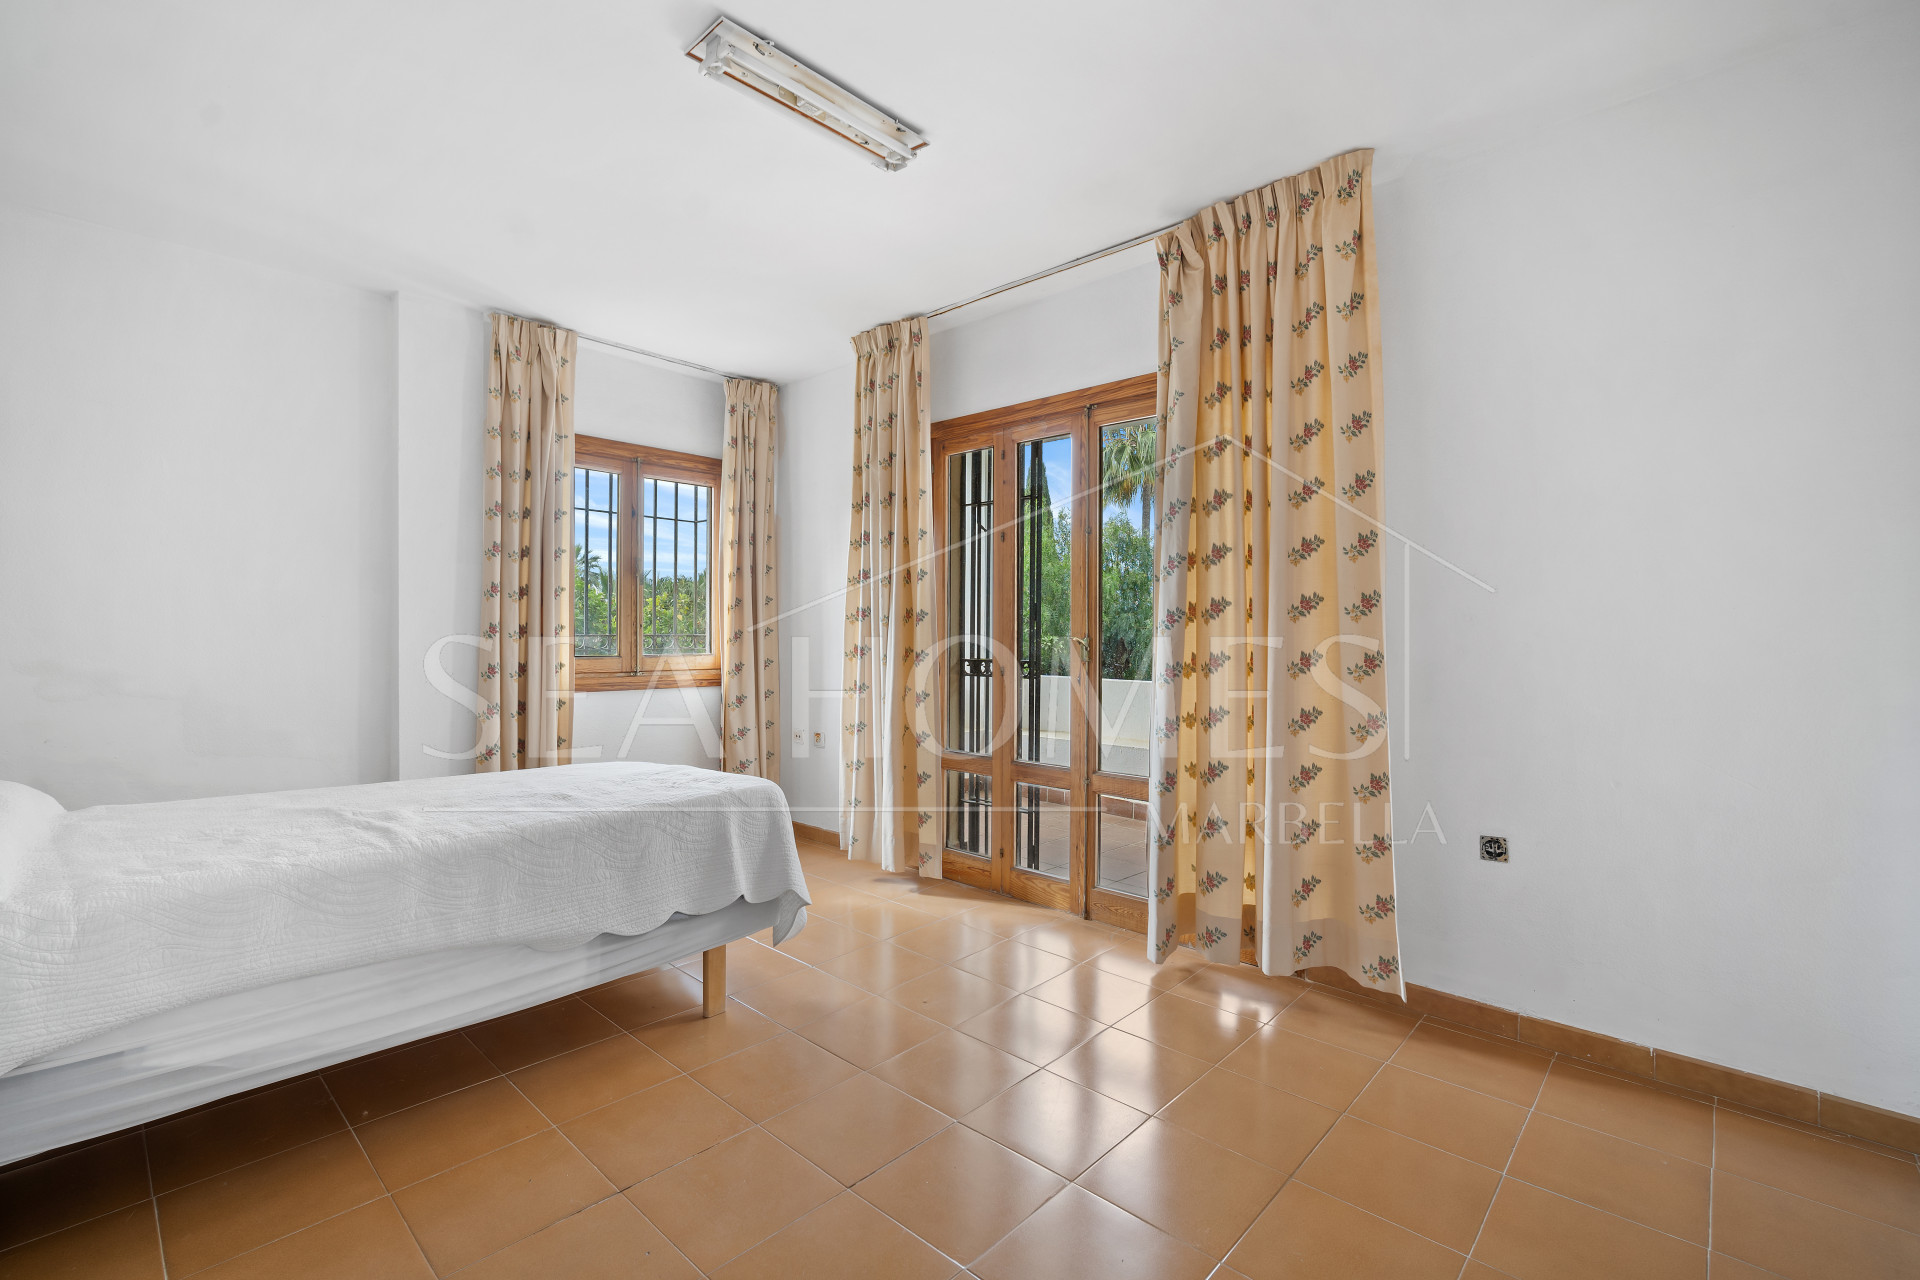 South East Facing Six Bedroom Villa in El Rosario, close to the beach with sea views - fantastic opportunity!